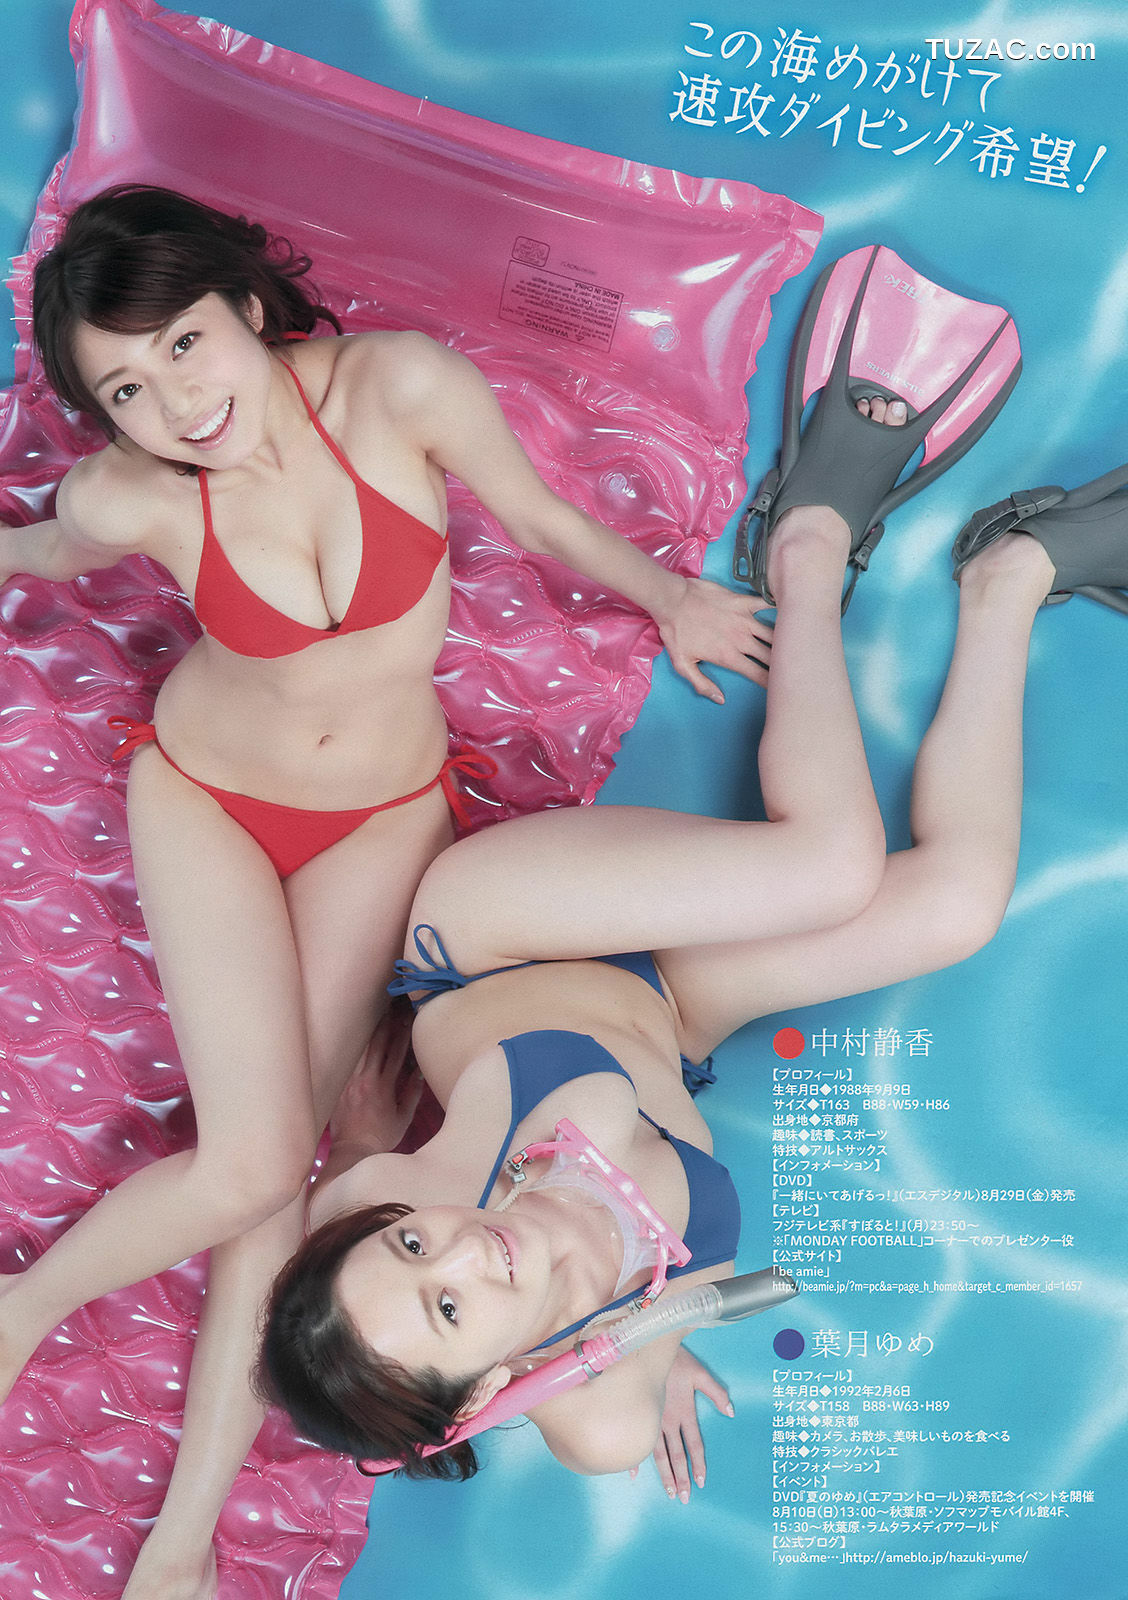 Young Magazine杂志写真_ 中村静香 さいとうまりな 2014年No.36-37 写真杂志[12P]